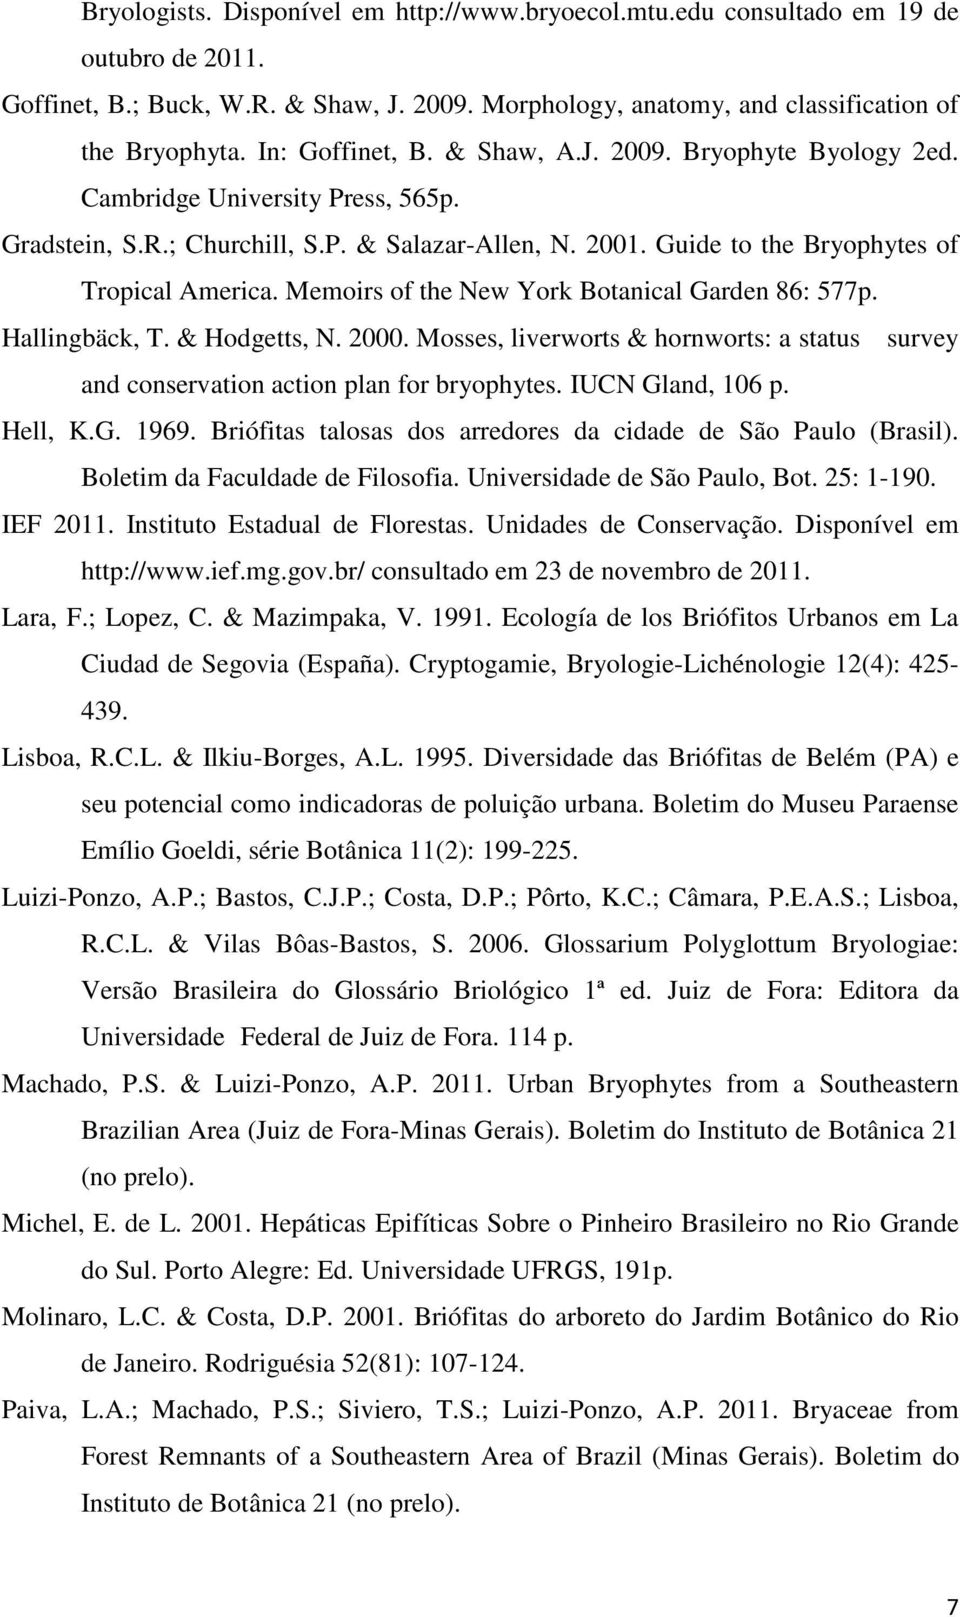 Memoirs of the New York Botanical Garden 86: 577p. Hallingbäck, T. & Hodgetts, N. 2000. Mosses, liverworts & hornworts: a status survey and conservation action plan for bryophytes. IUCN Gland, 106 p.